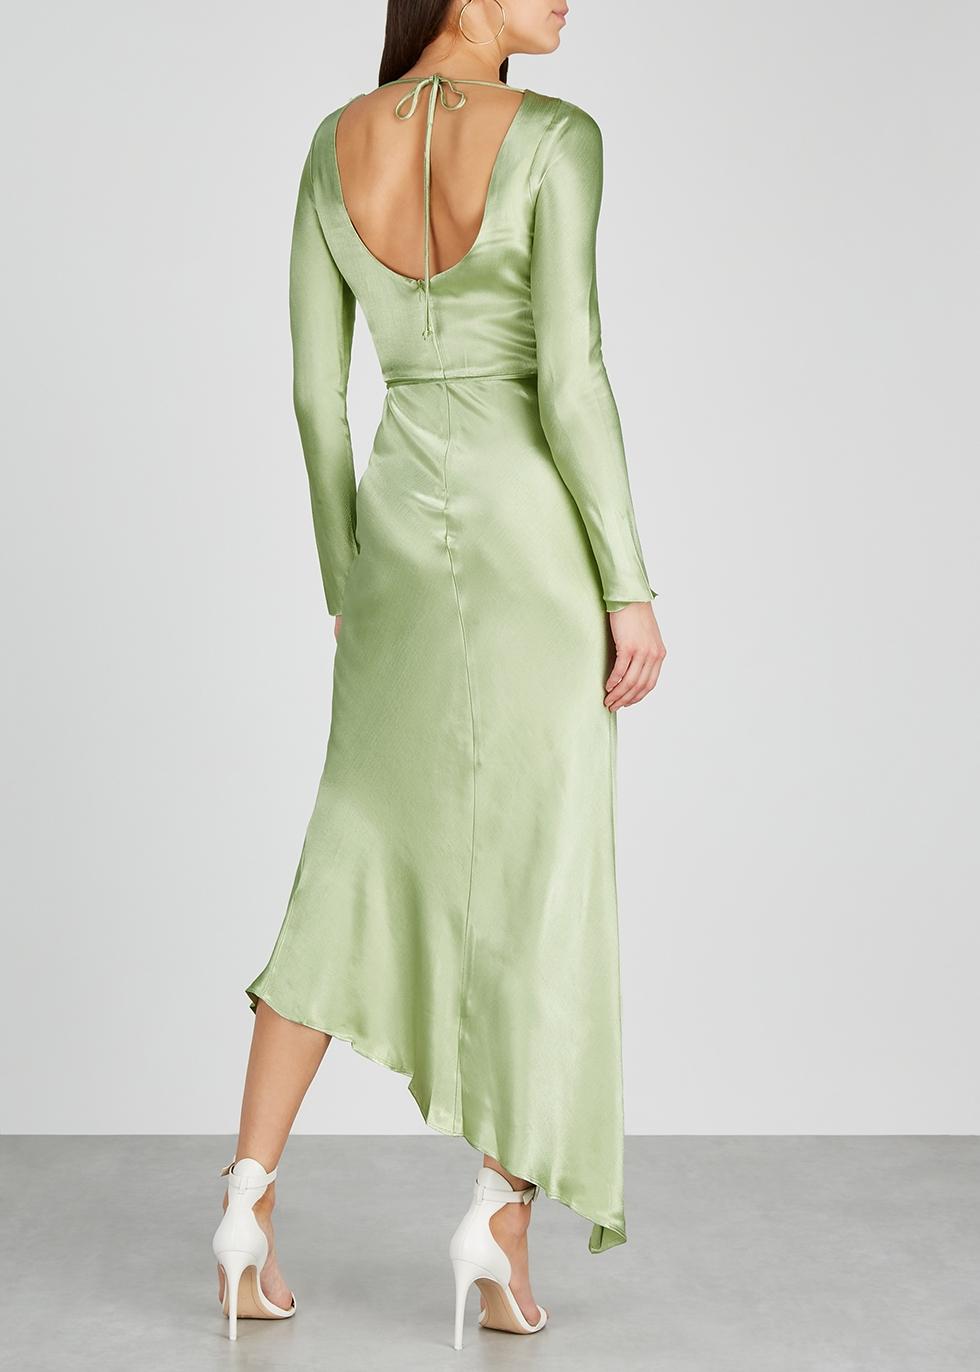 Bec & Bridge Crest Light Green Satin Midi Dress | Lyst